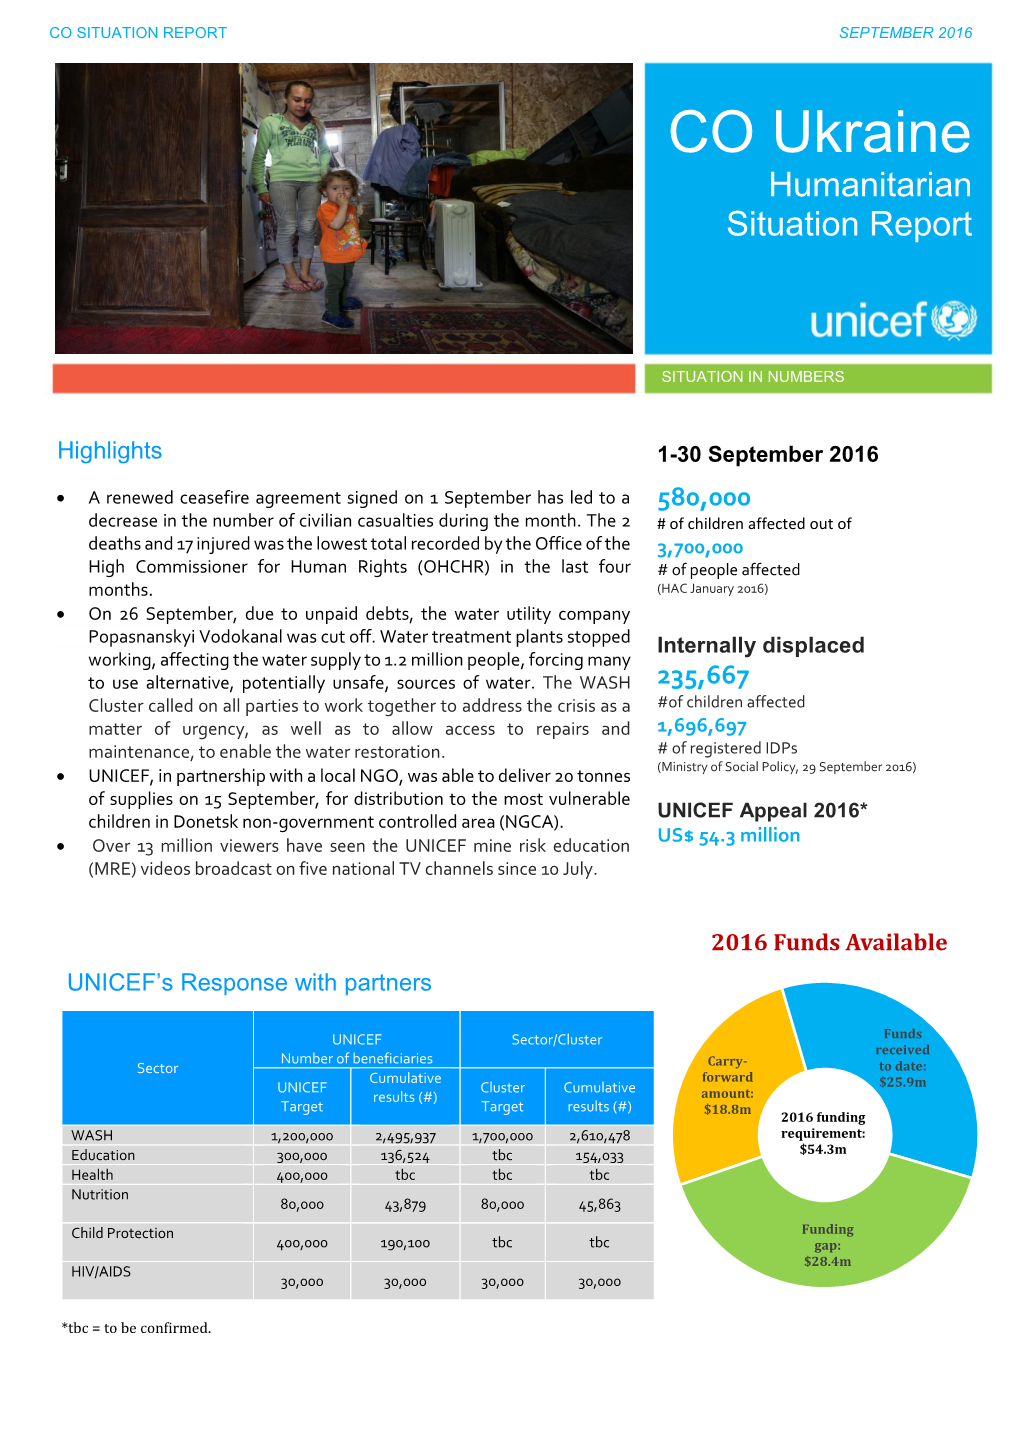 CO Ukraine Humanitarian Situation Report